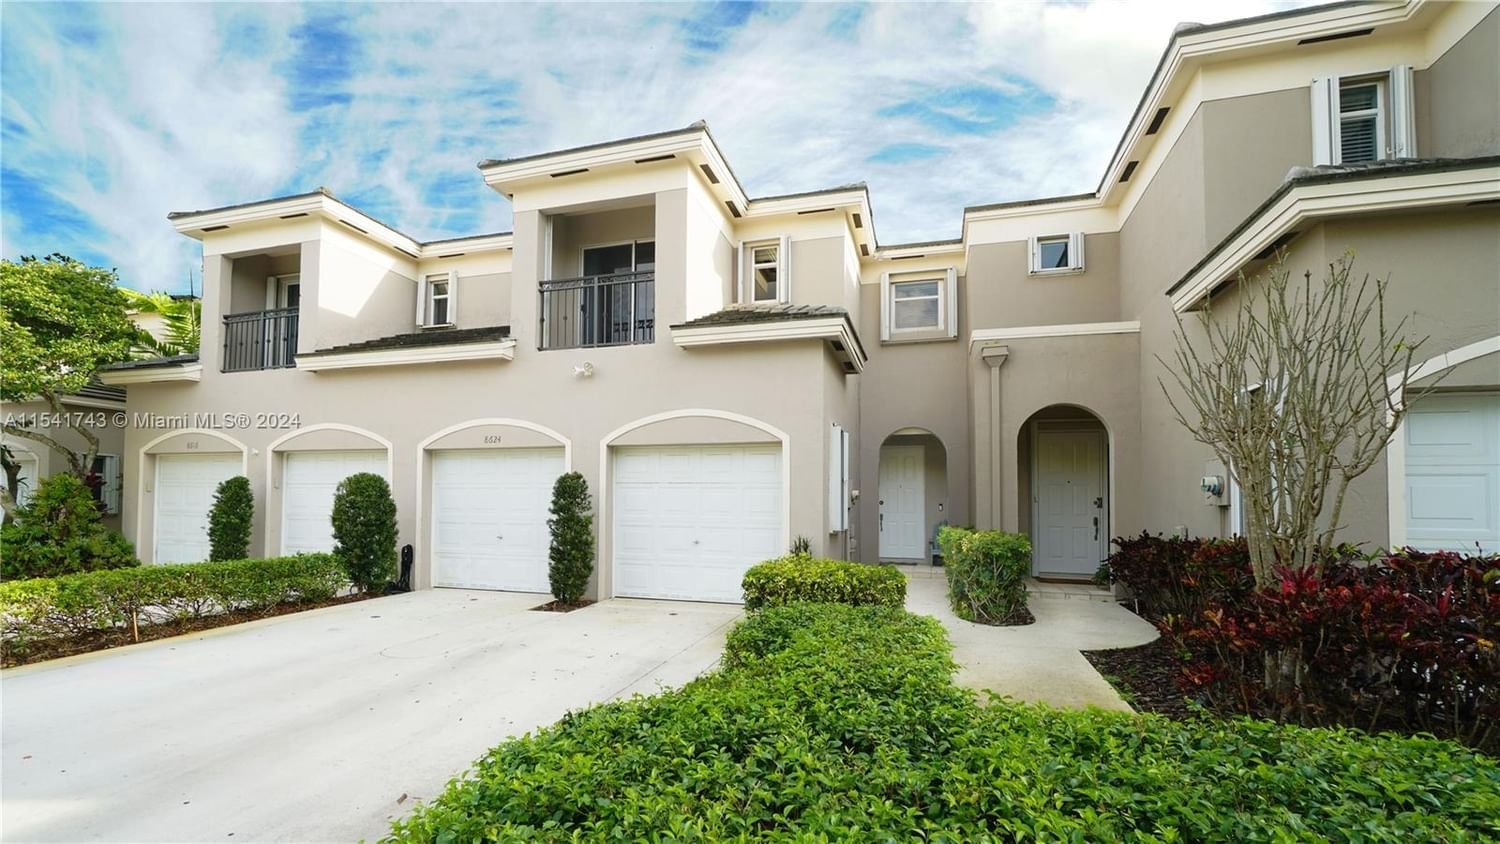 Real estate property located at 8624 139th Ter, Miami-Dade County, TUSCANY ESTATES, Palmetto Bay, FL